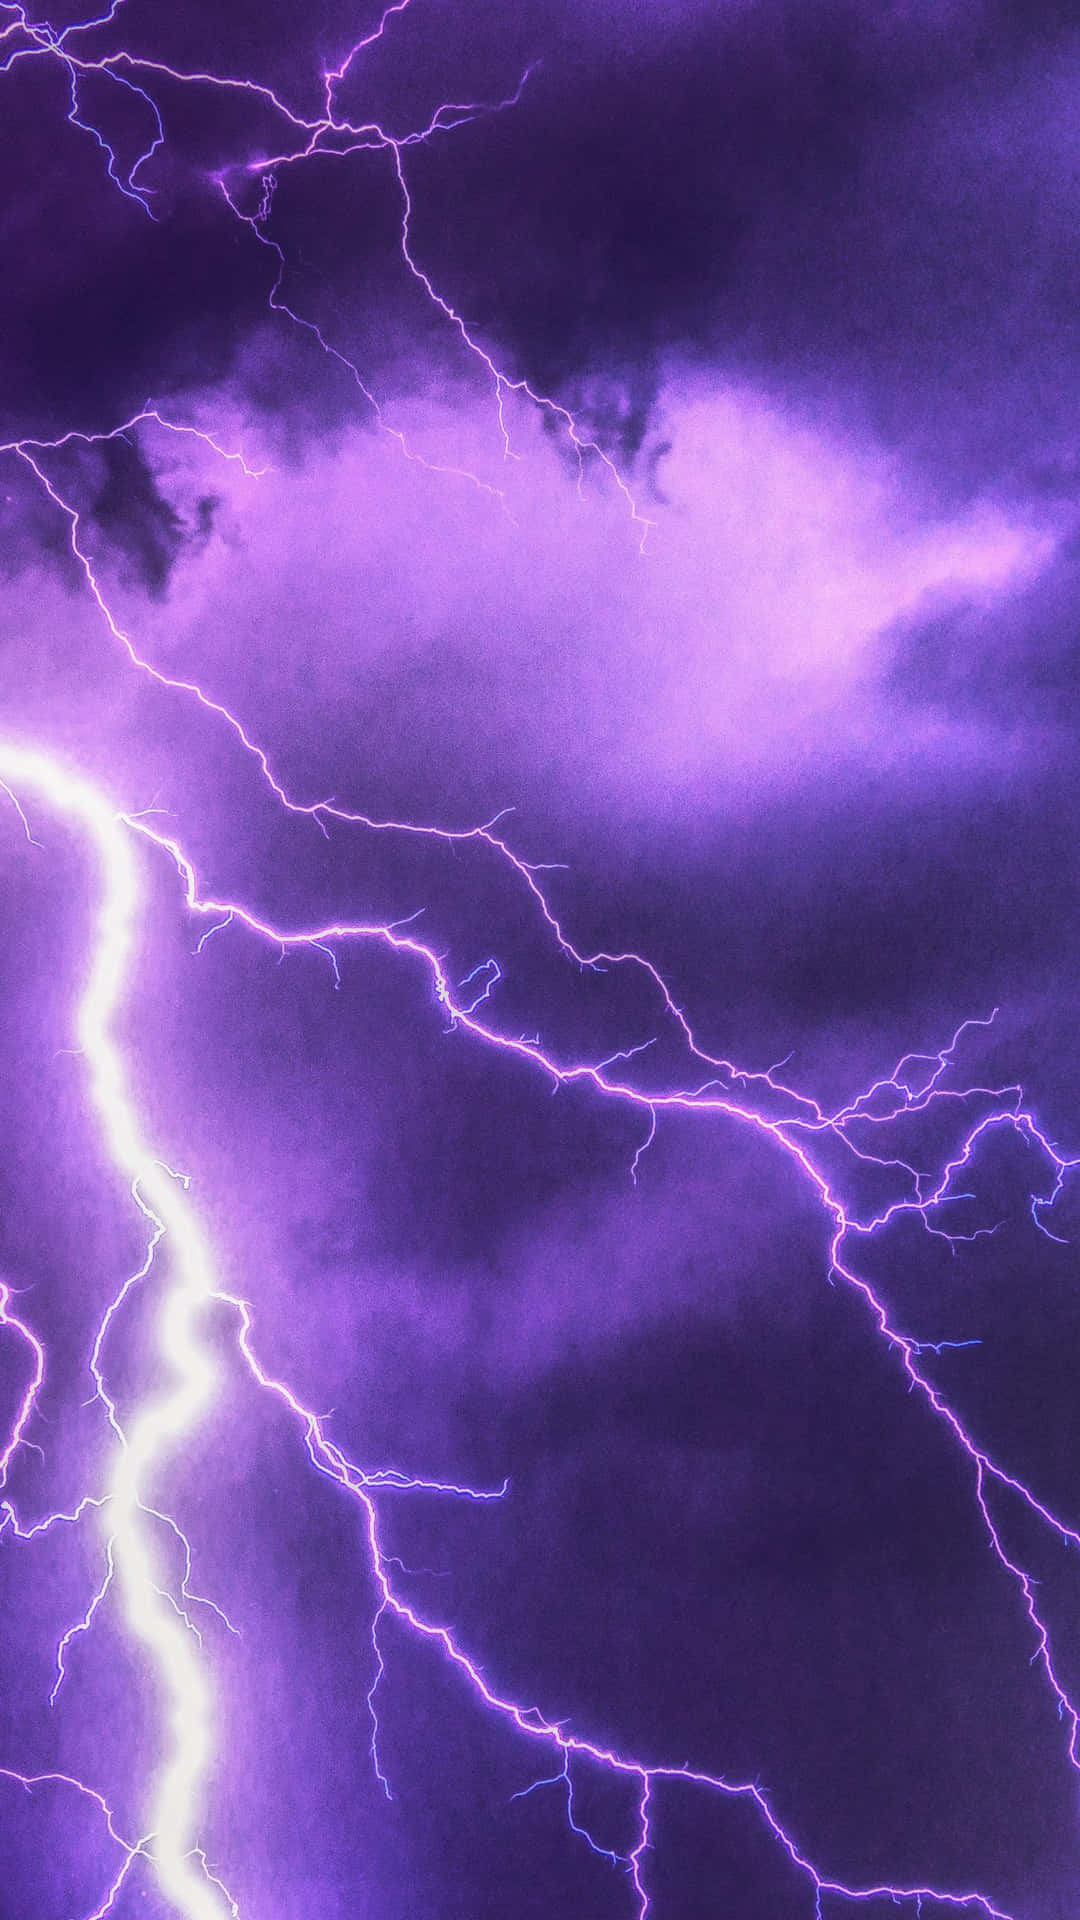 Stunning Display Of Purple Lightning In Night Sky